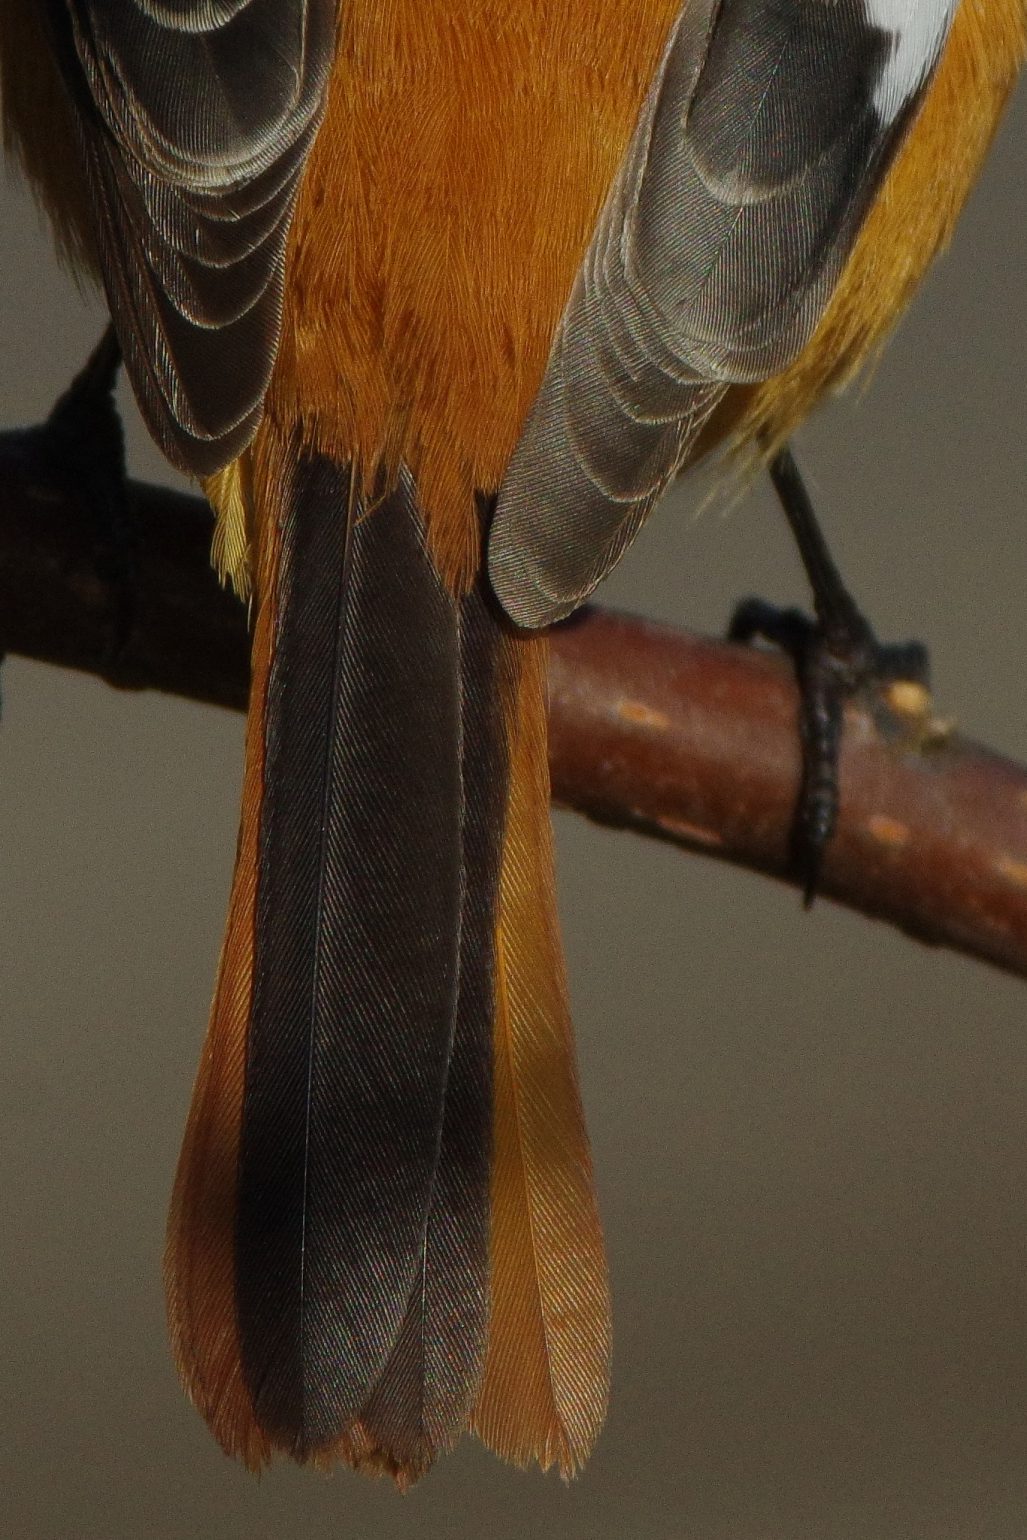 AFボーグ BORG71FLで撮影した野鳥・ジョウビタキの写真画像